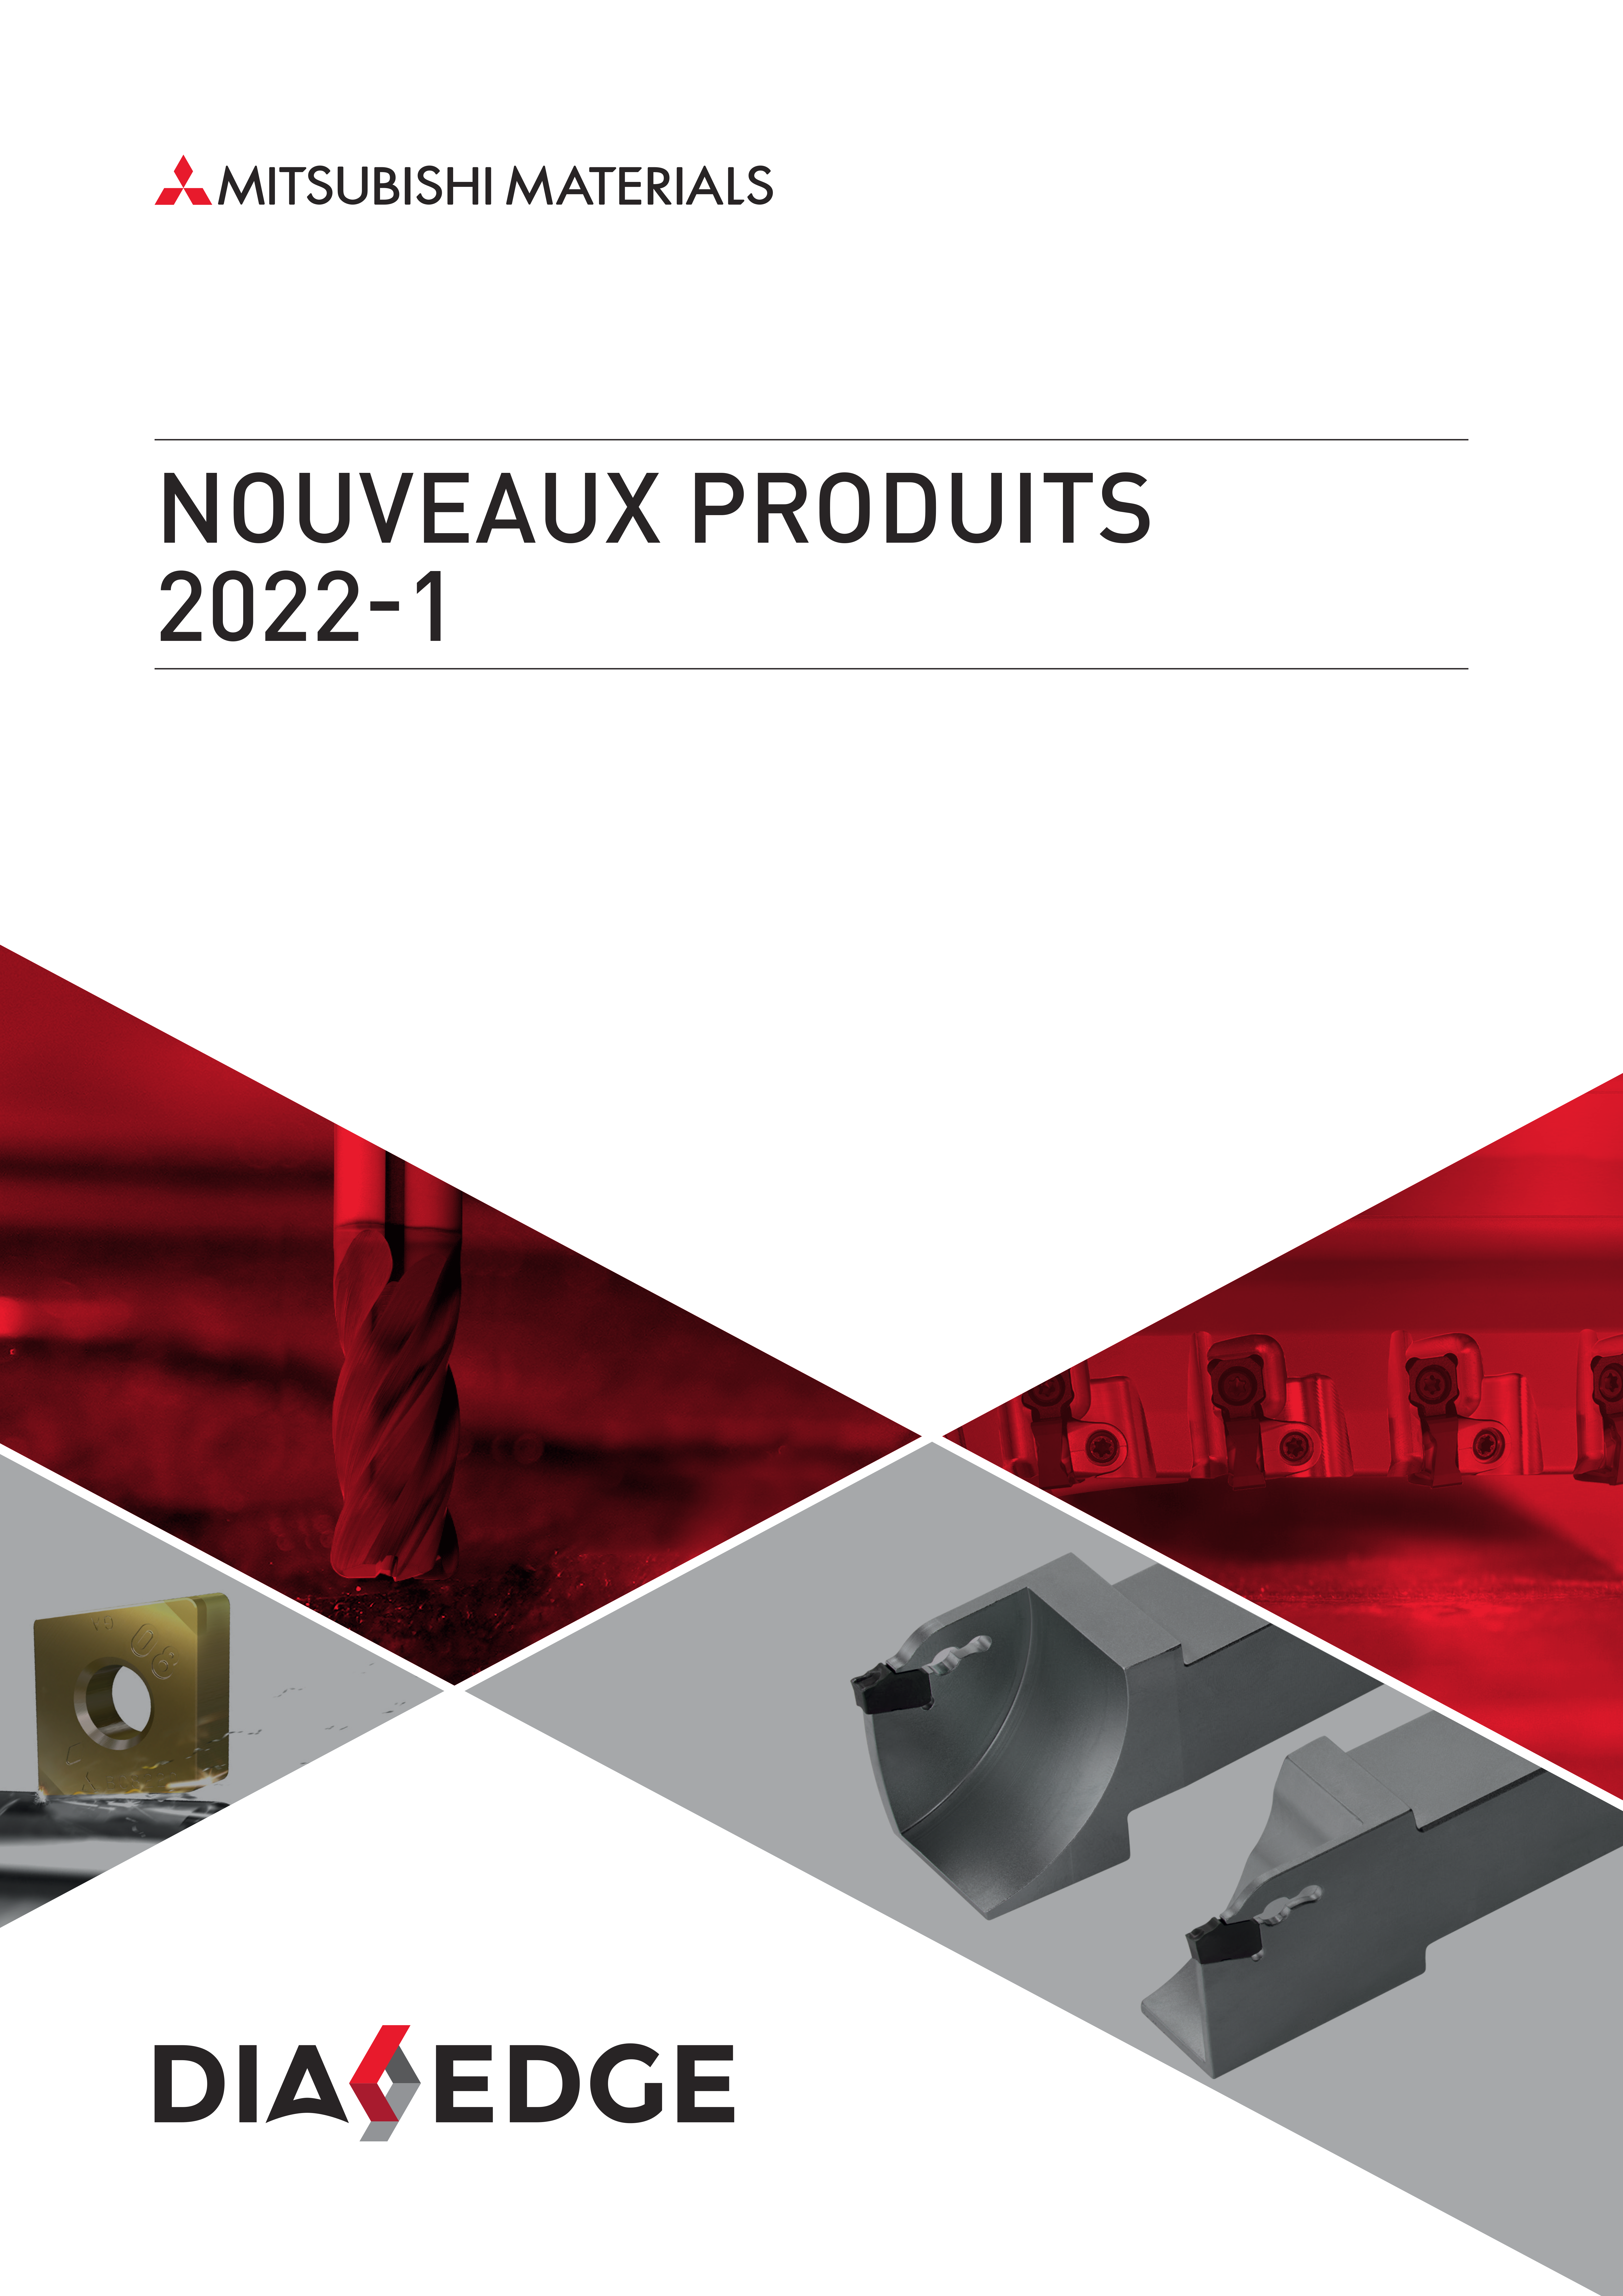 [Catalogue] Nouveaux produits 2022-1, de Mitsubishi Materials